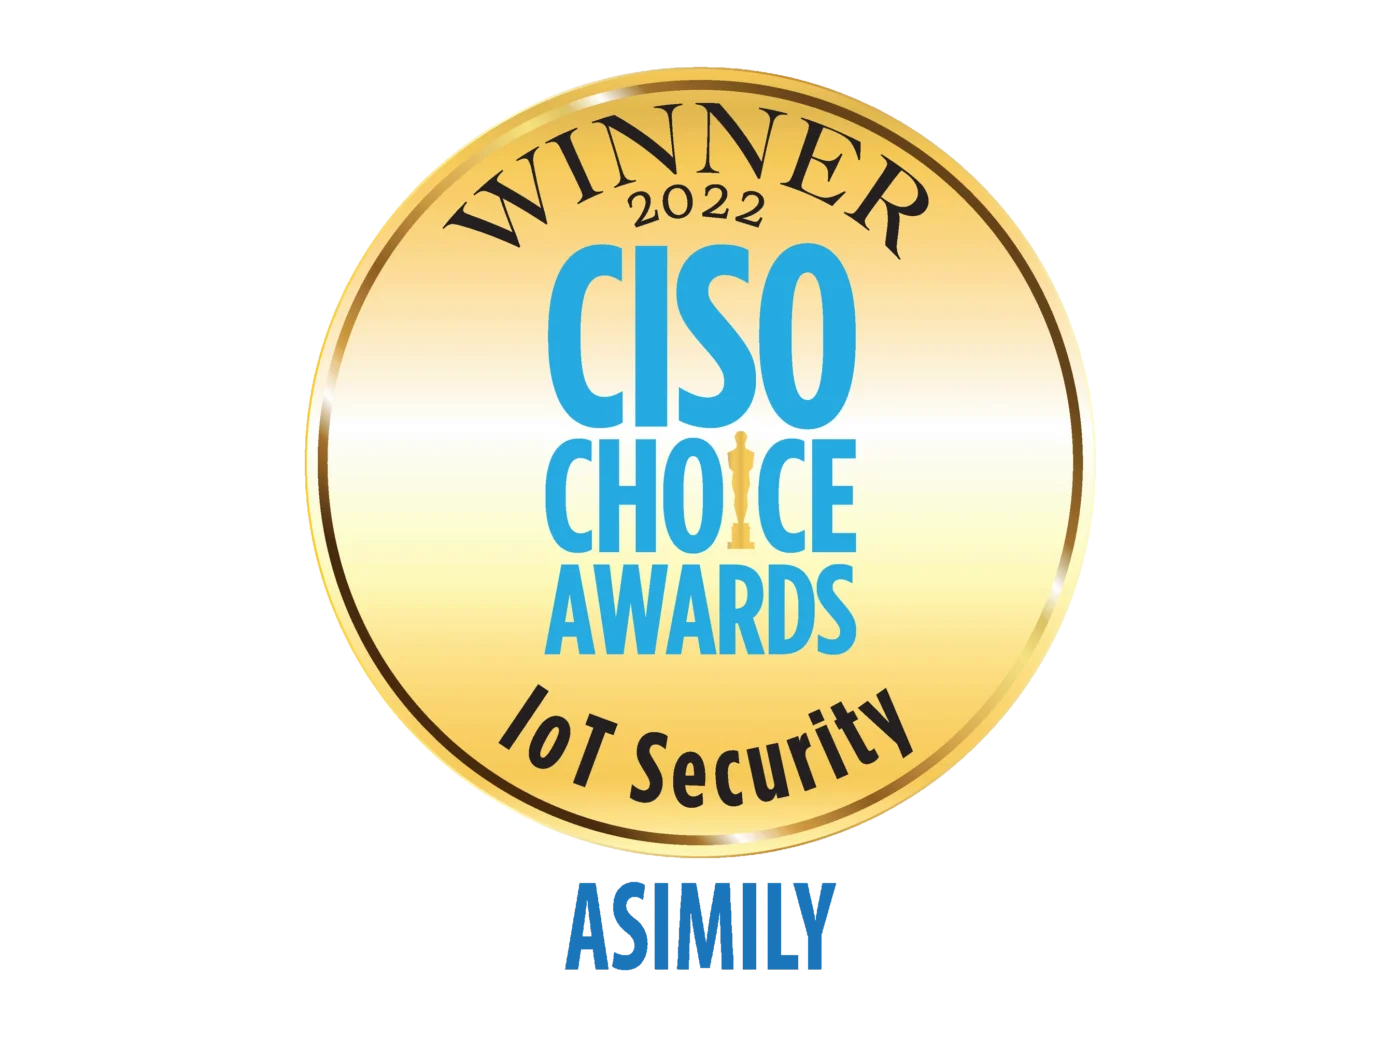 Asimily IoT Security CISO Choice Awards 2022